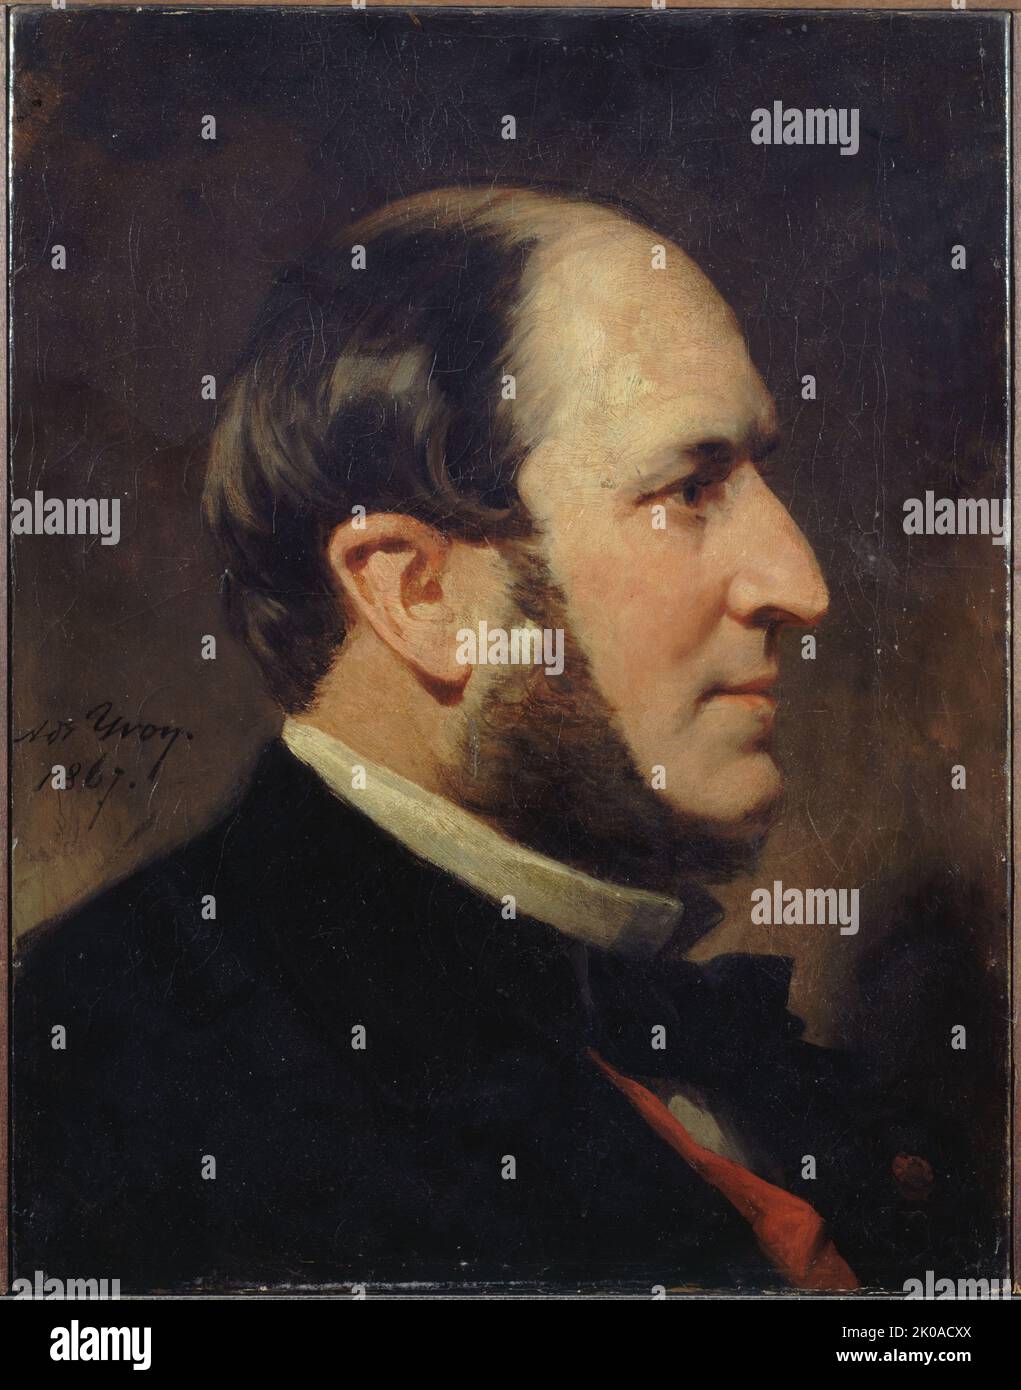 Portrait of Baron Haussmann (1809-1891), prefect of the Seine, 1867. Stock Photo